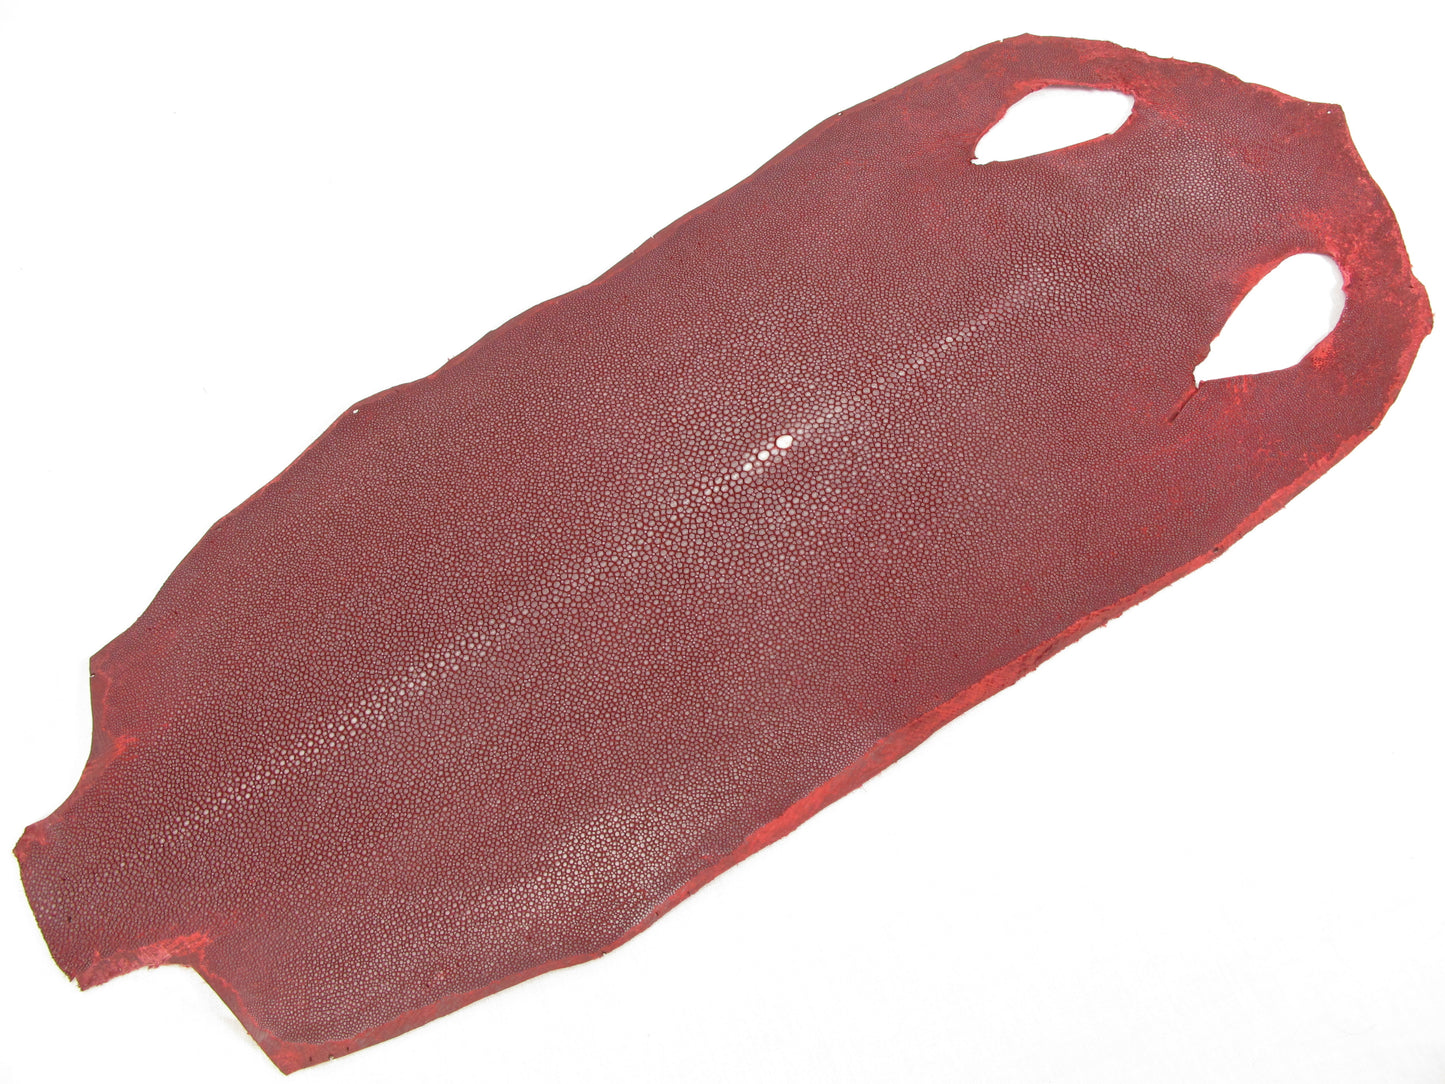 Genuine Polished Stingray Skin Leather Hide Pelt Long Shape Red